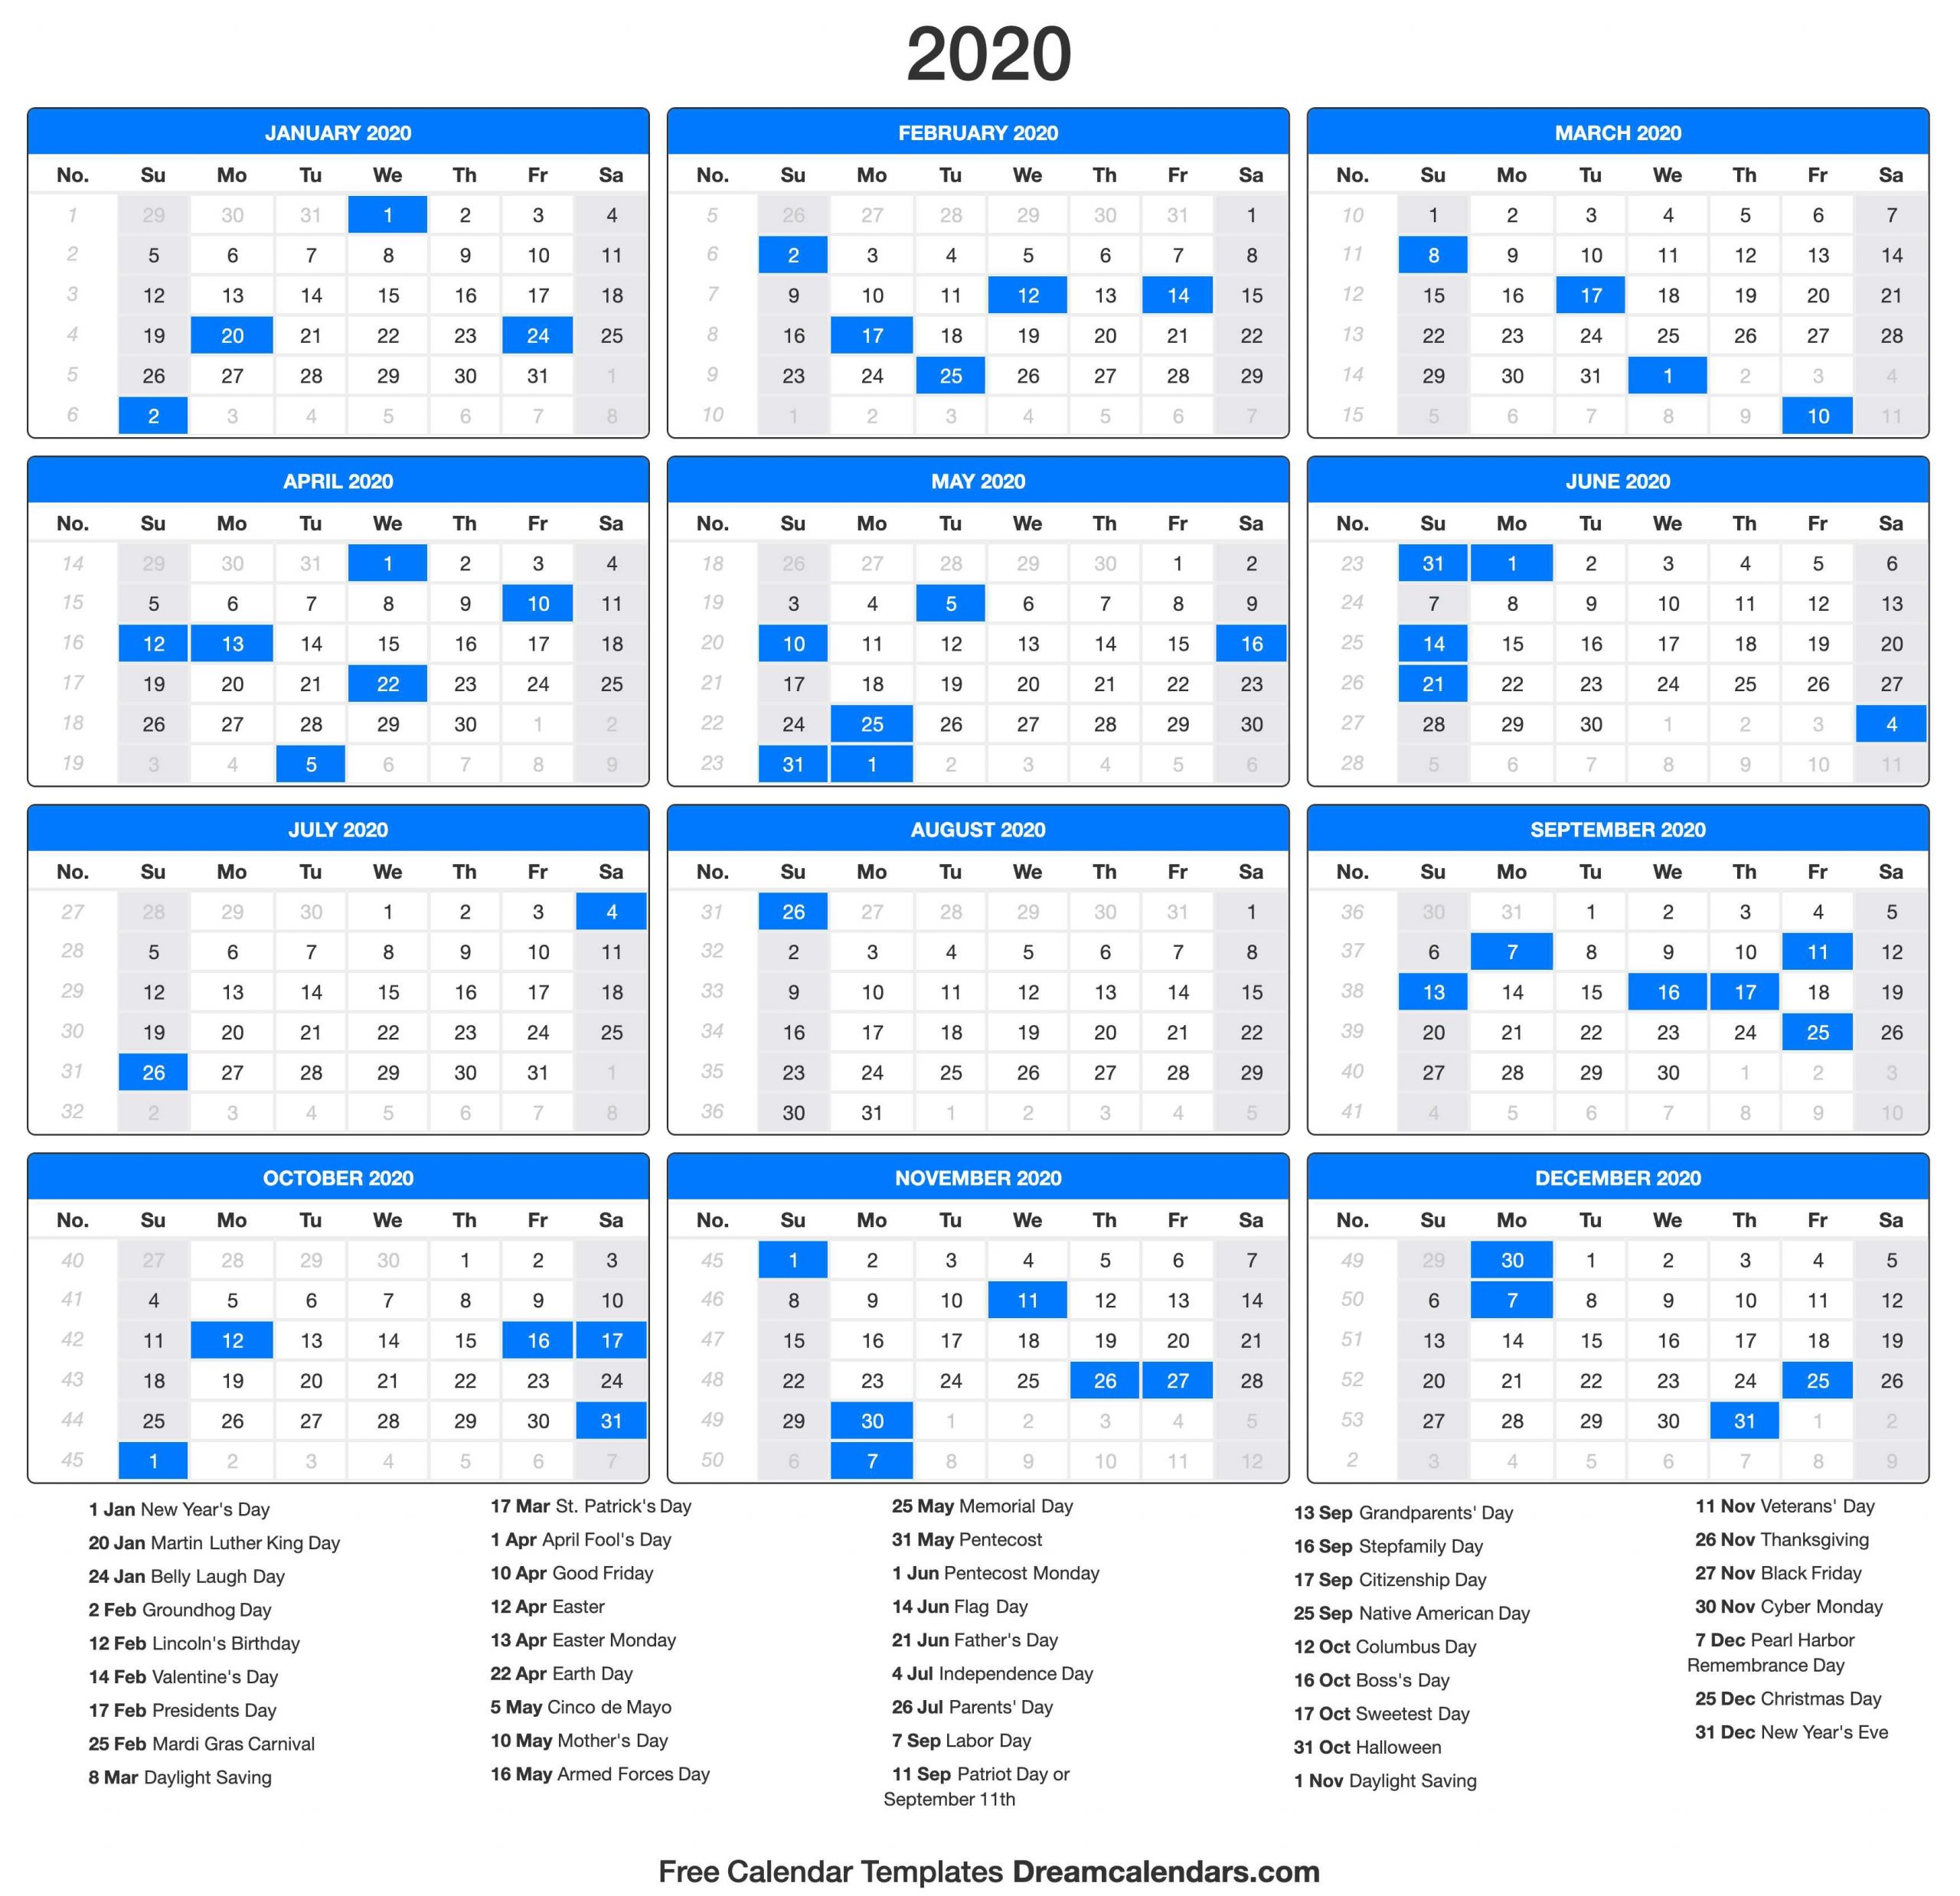 Yearly 2020 Calendar Templates Hi Everyone Did You Make